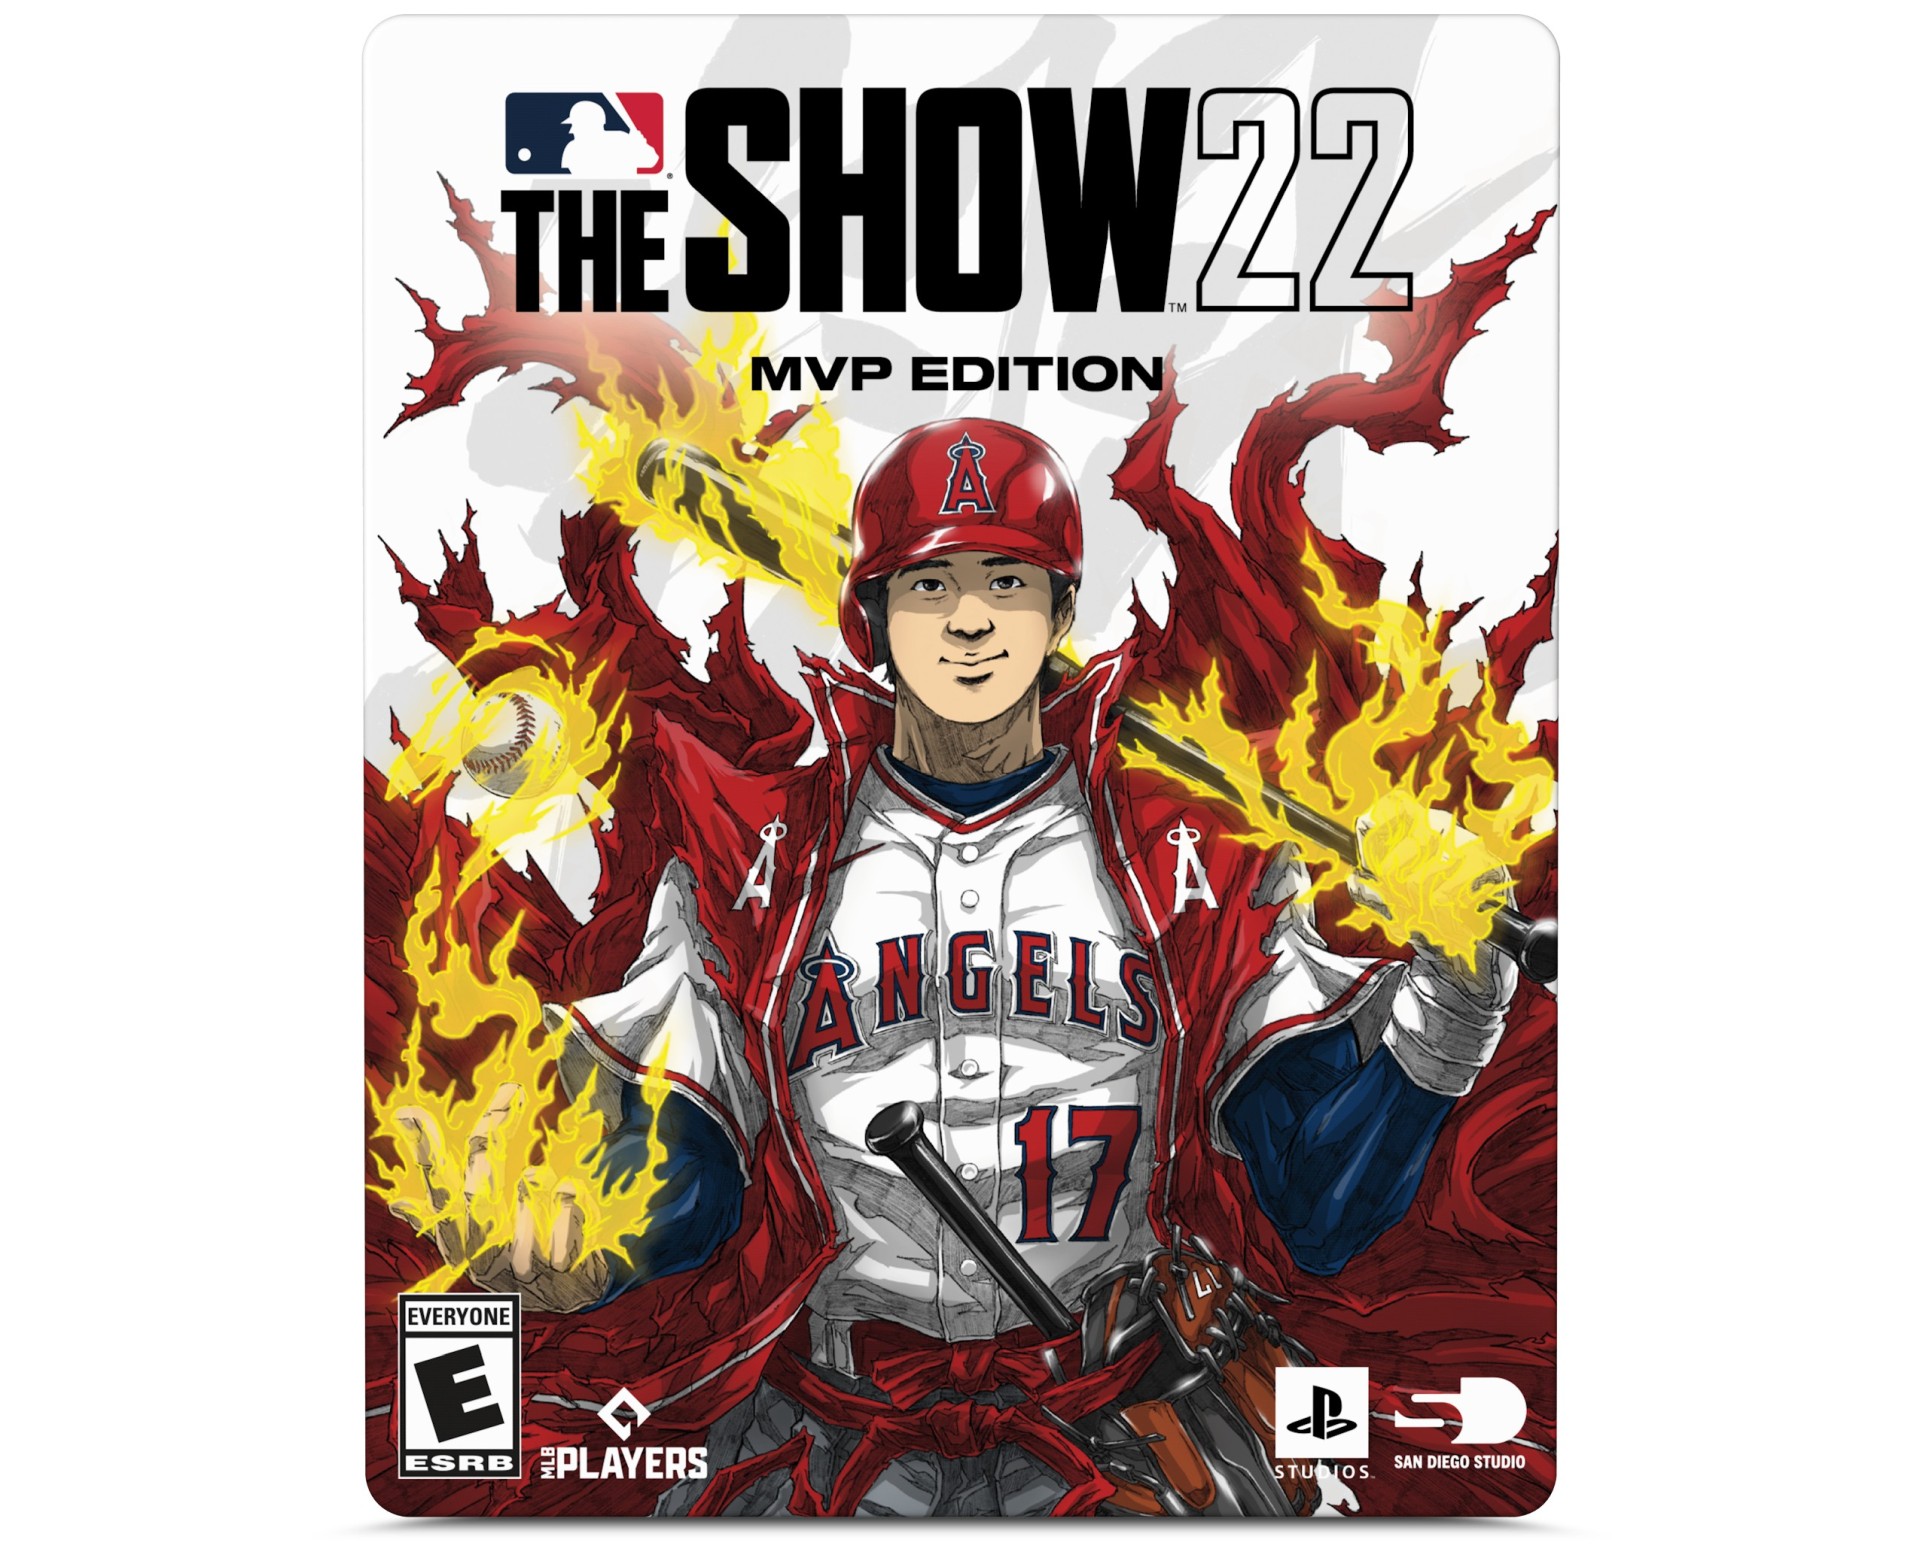 Famous Illustrator Takashi Okazaki Creates MLB The Show 22’s Collector’s Edition Cover Art Featuring Shohei Ohtani